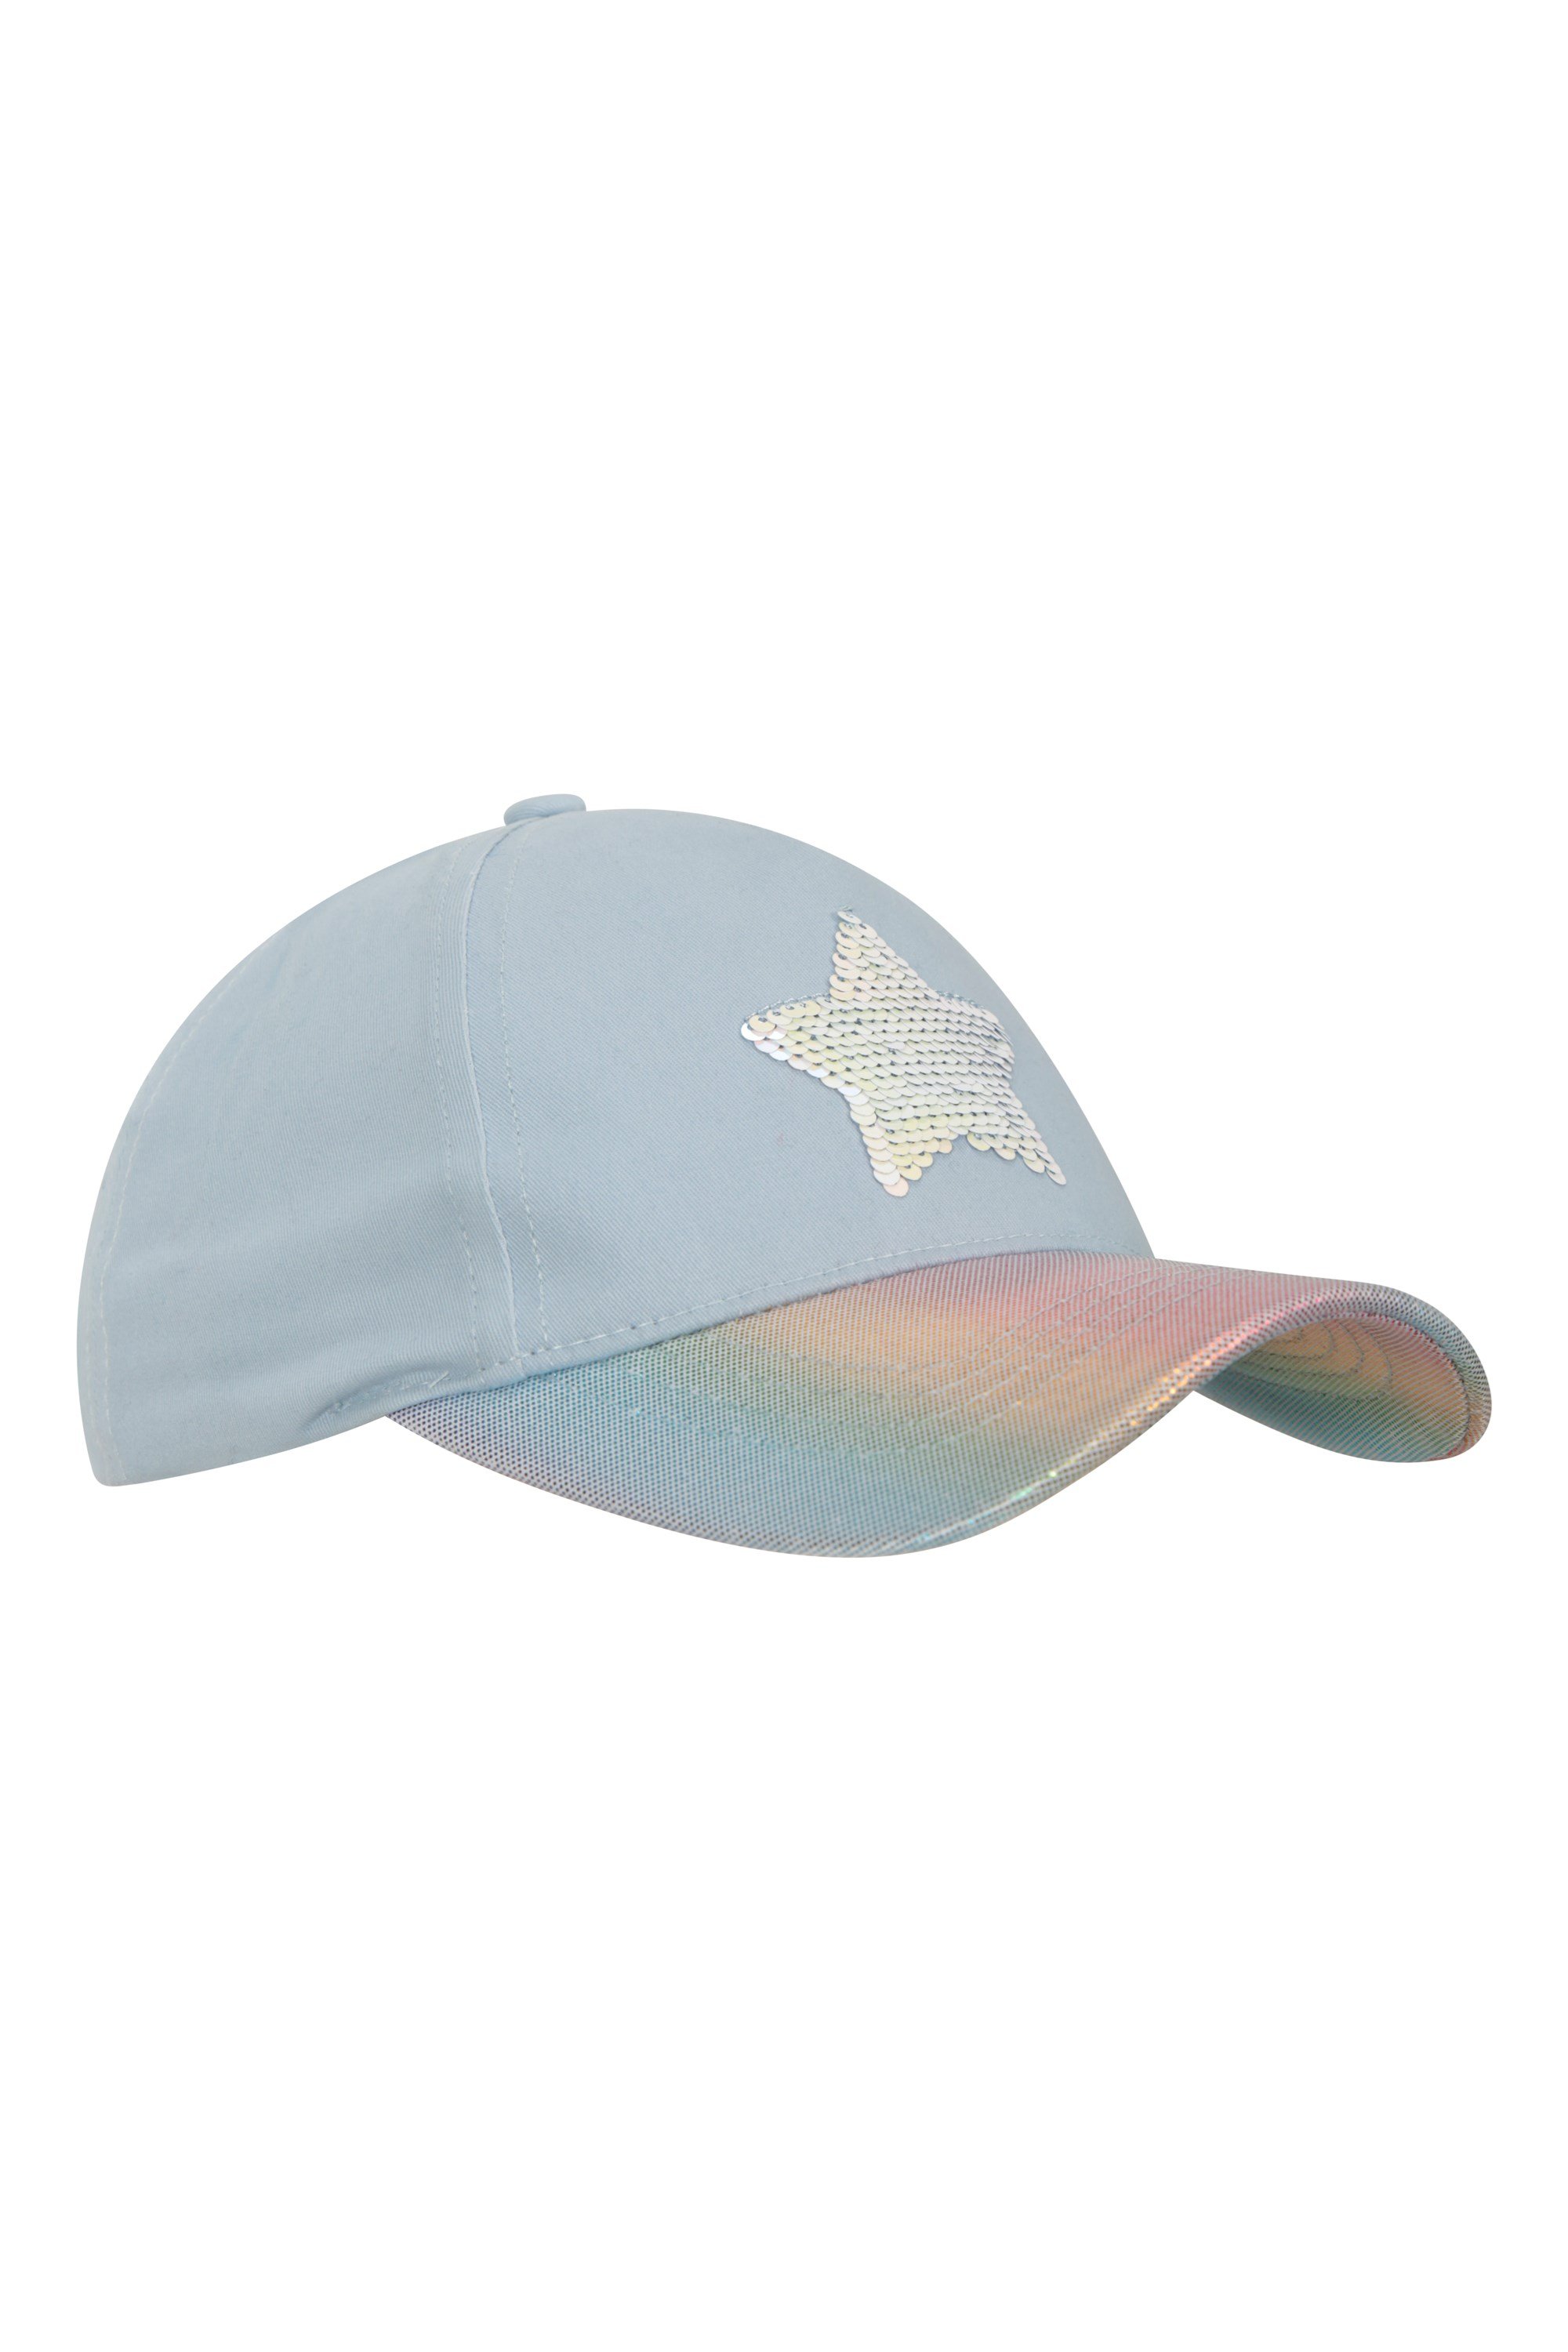 Star Sequin Kids Baseball Cap - Blue